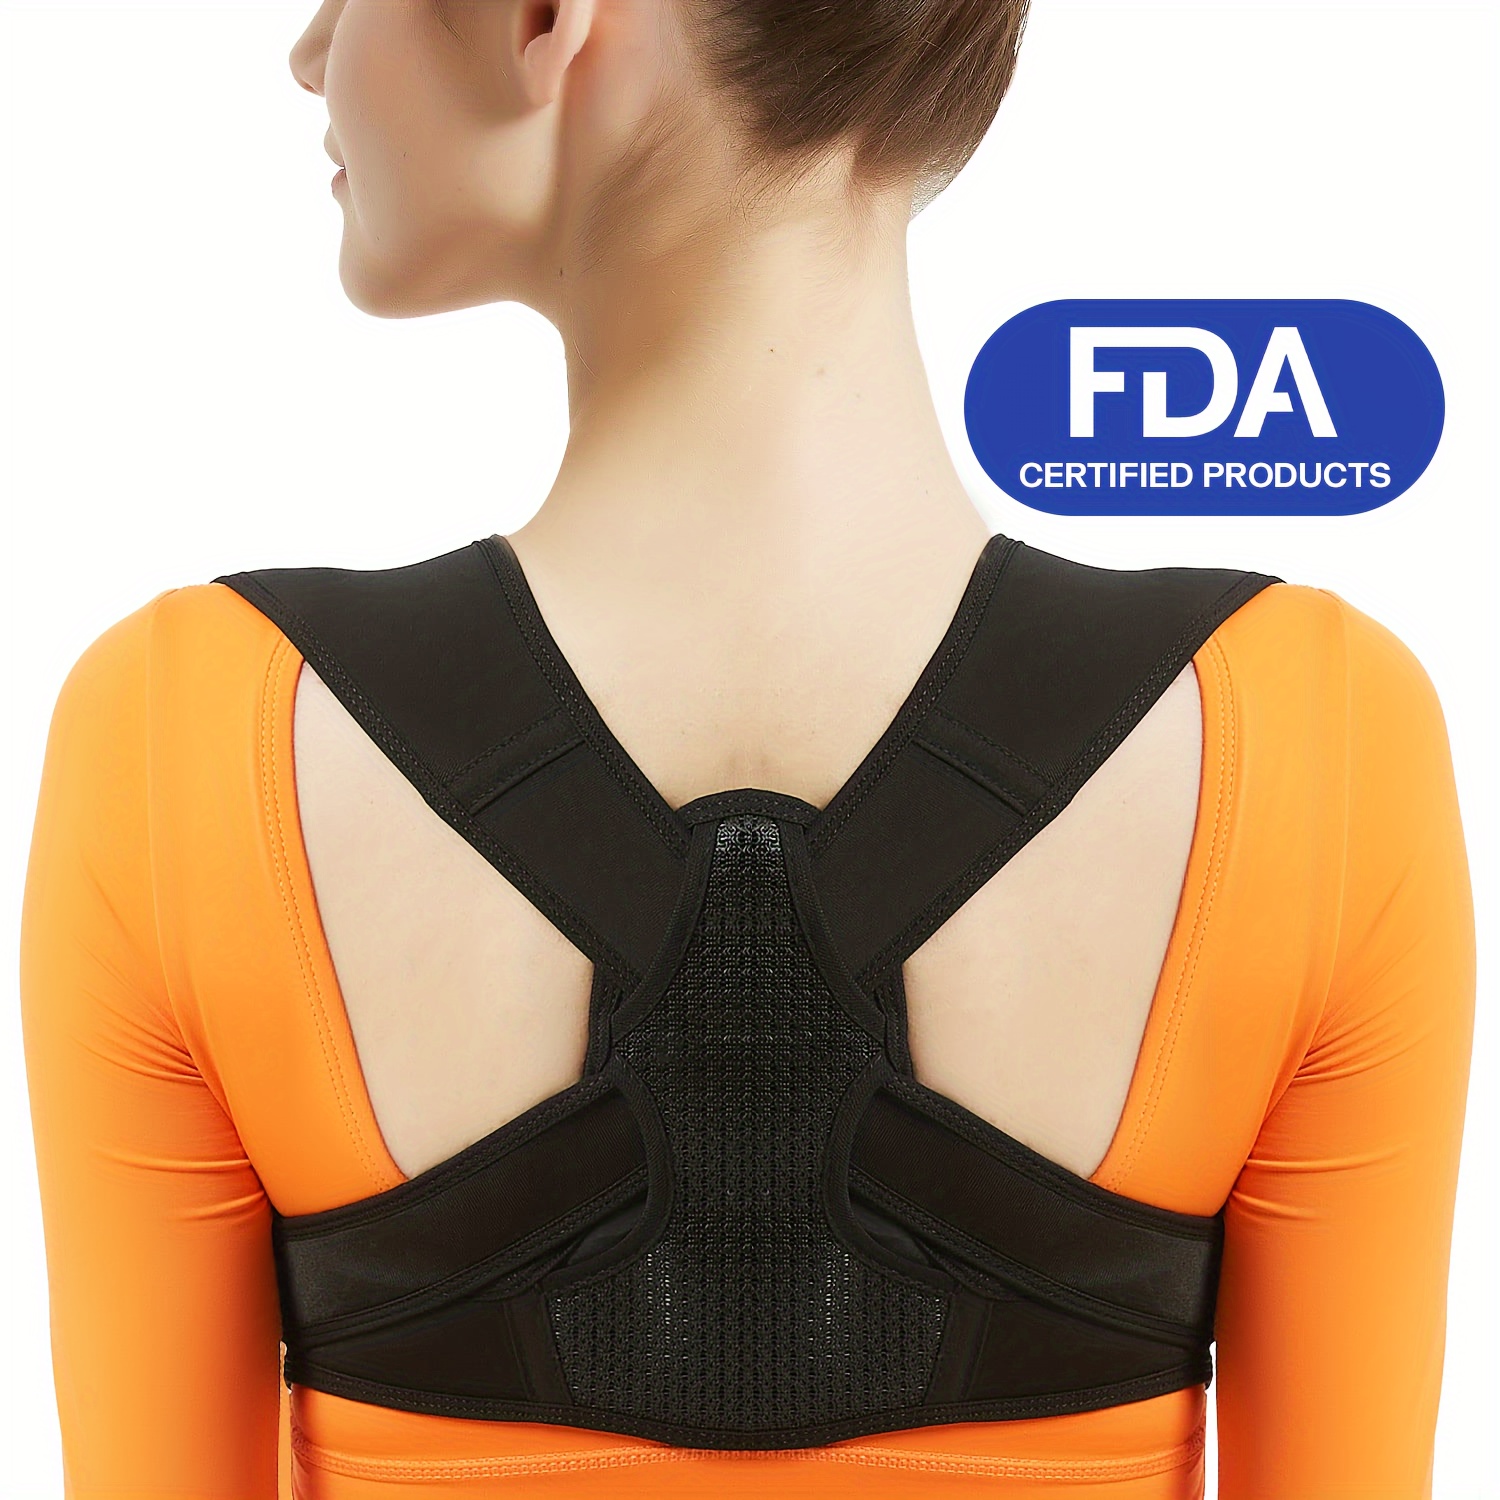 Back Brace Posture Corrector - Support for Neck Shoulder Upper and Lower  Back Pain Relief,Posture Brace for Cervical Lumbar Spine,Fixed and  Adjustable